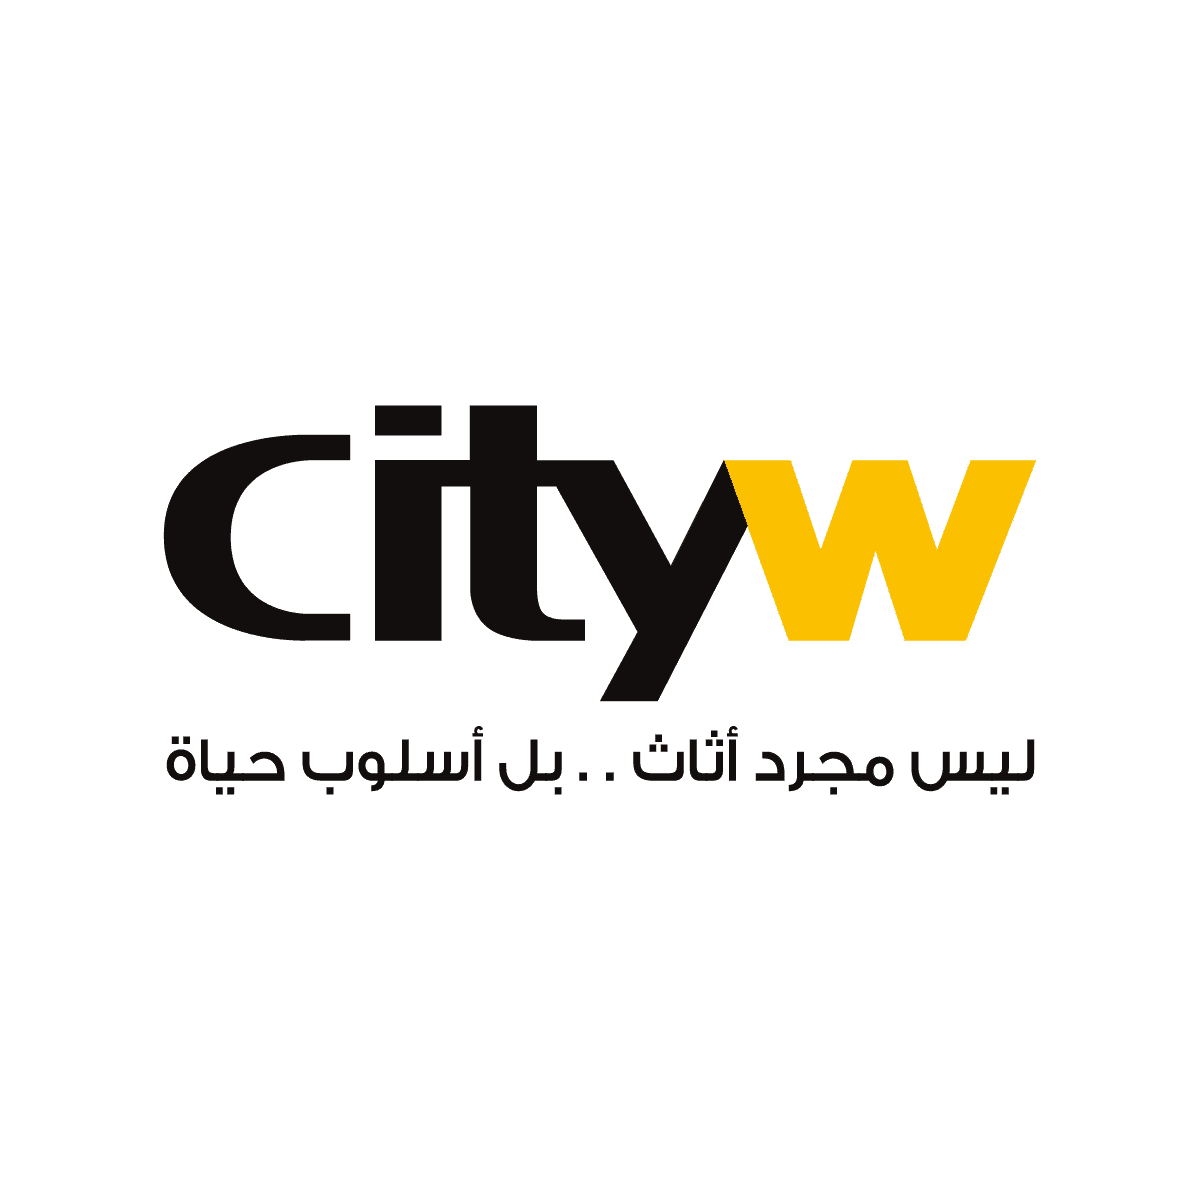 Cityw